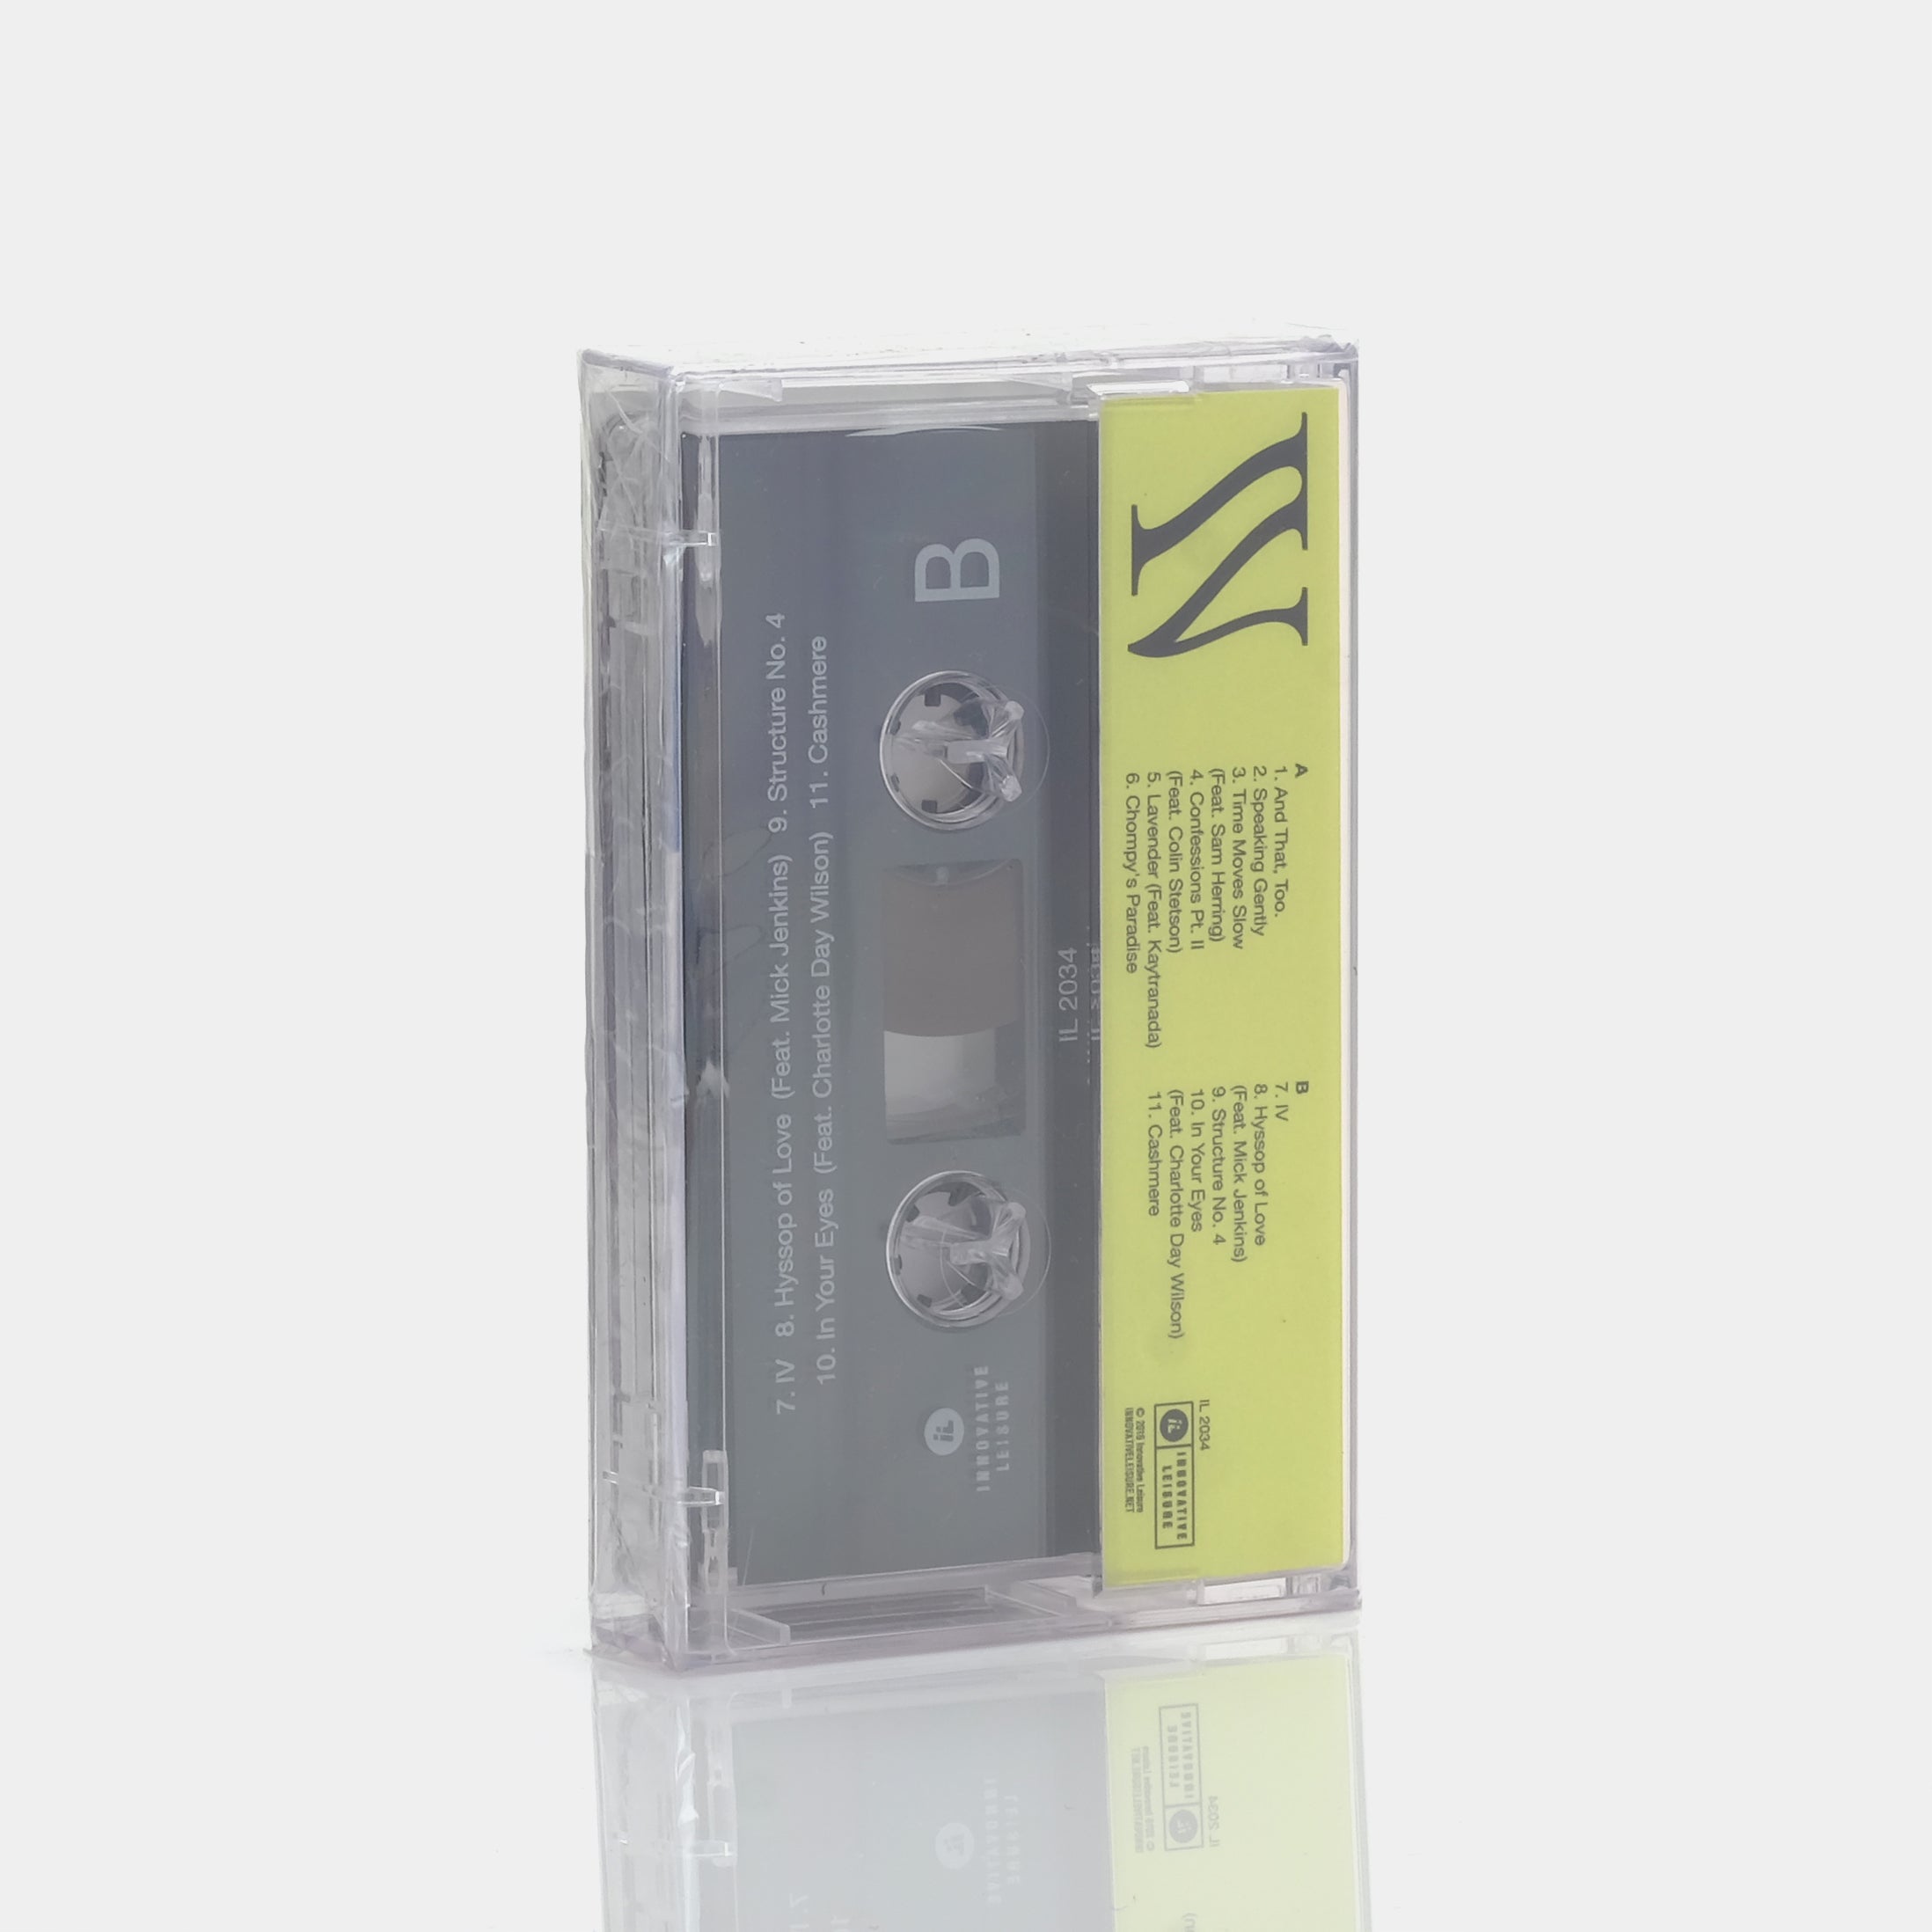 BADBADNOTGOOD - IV Cassette Tape